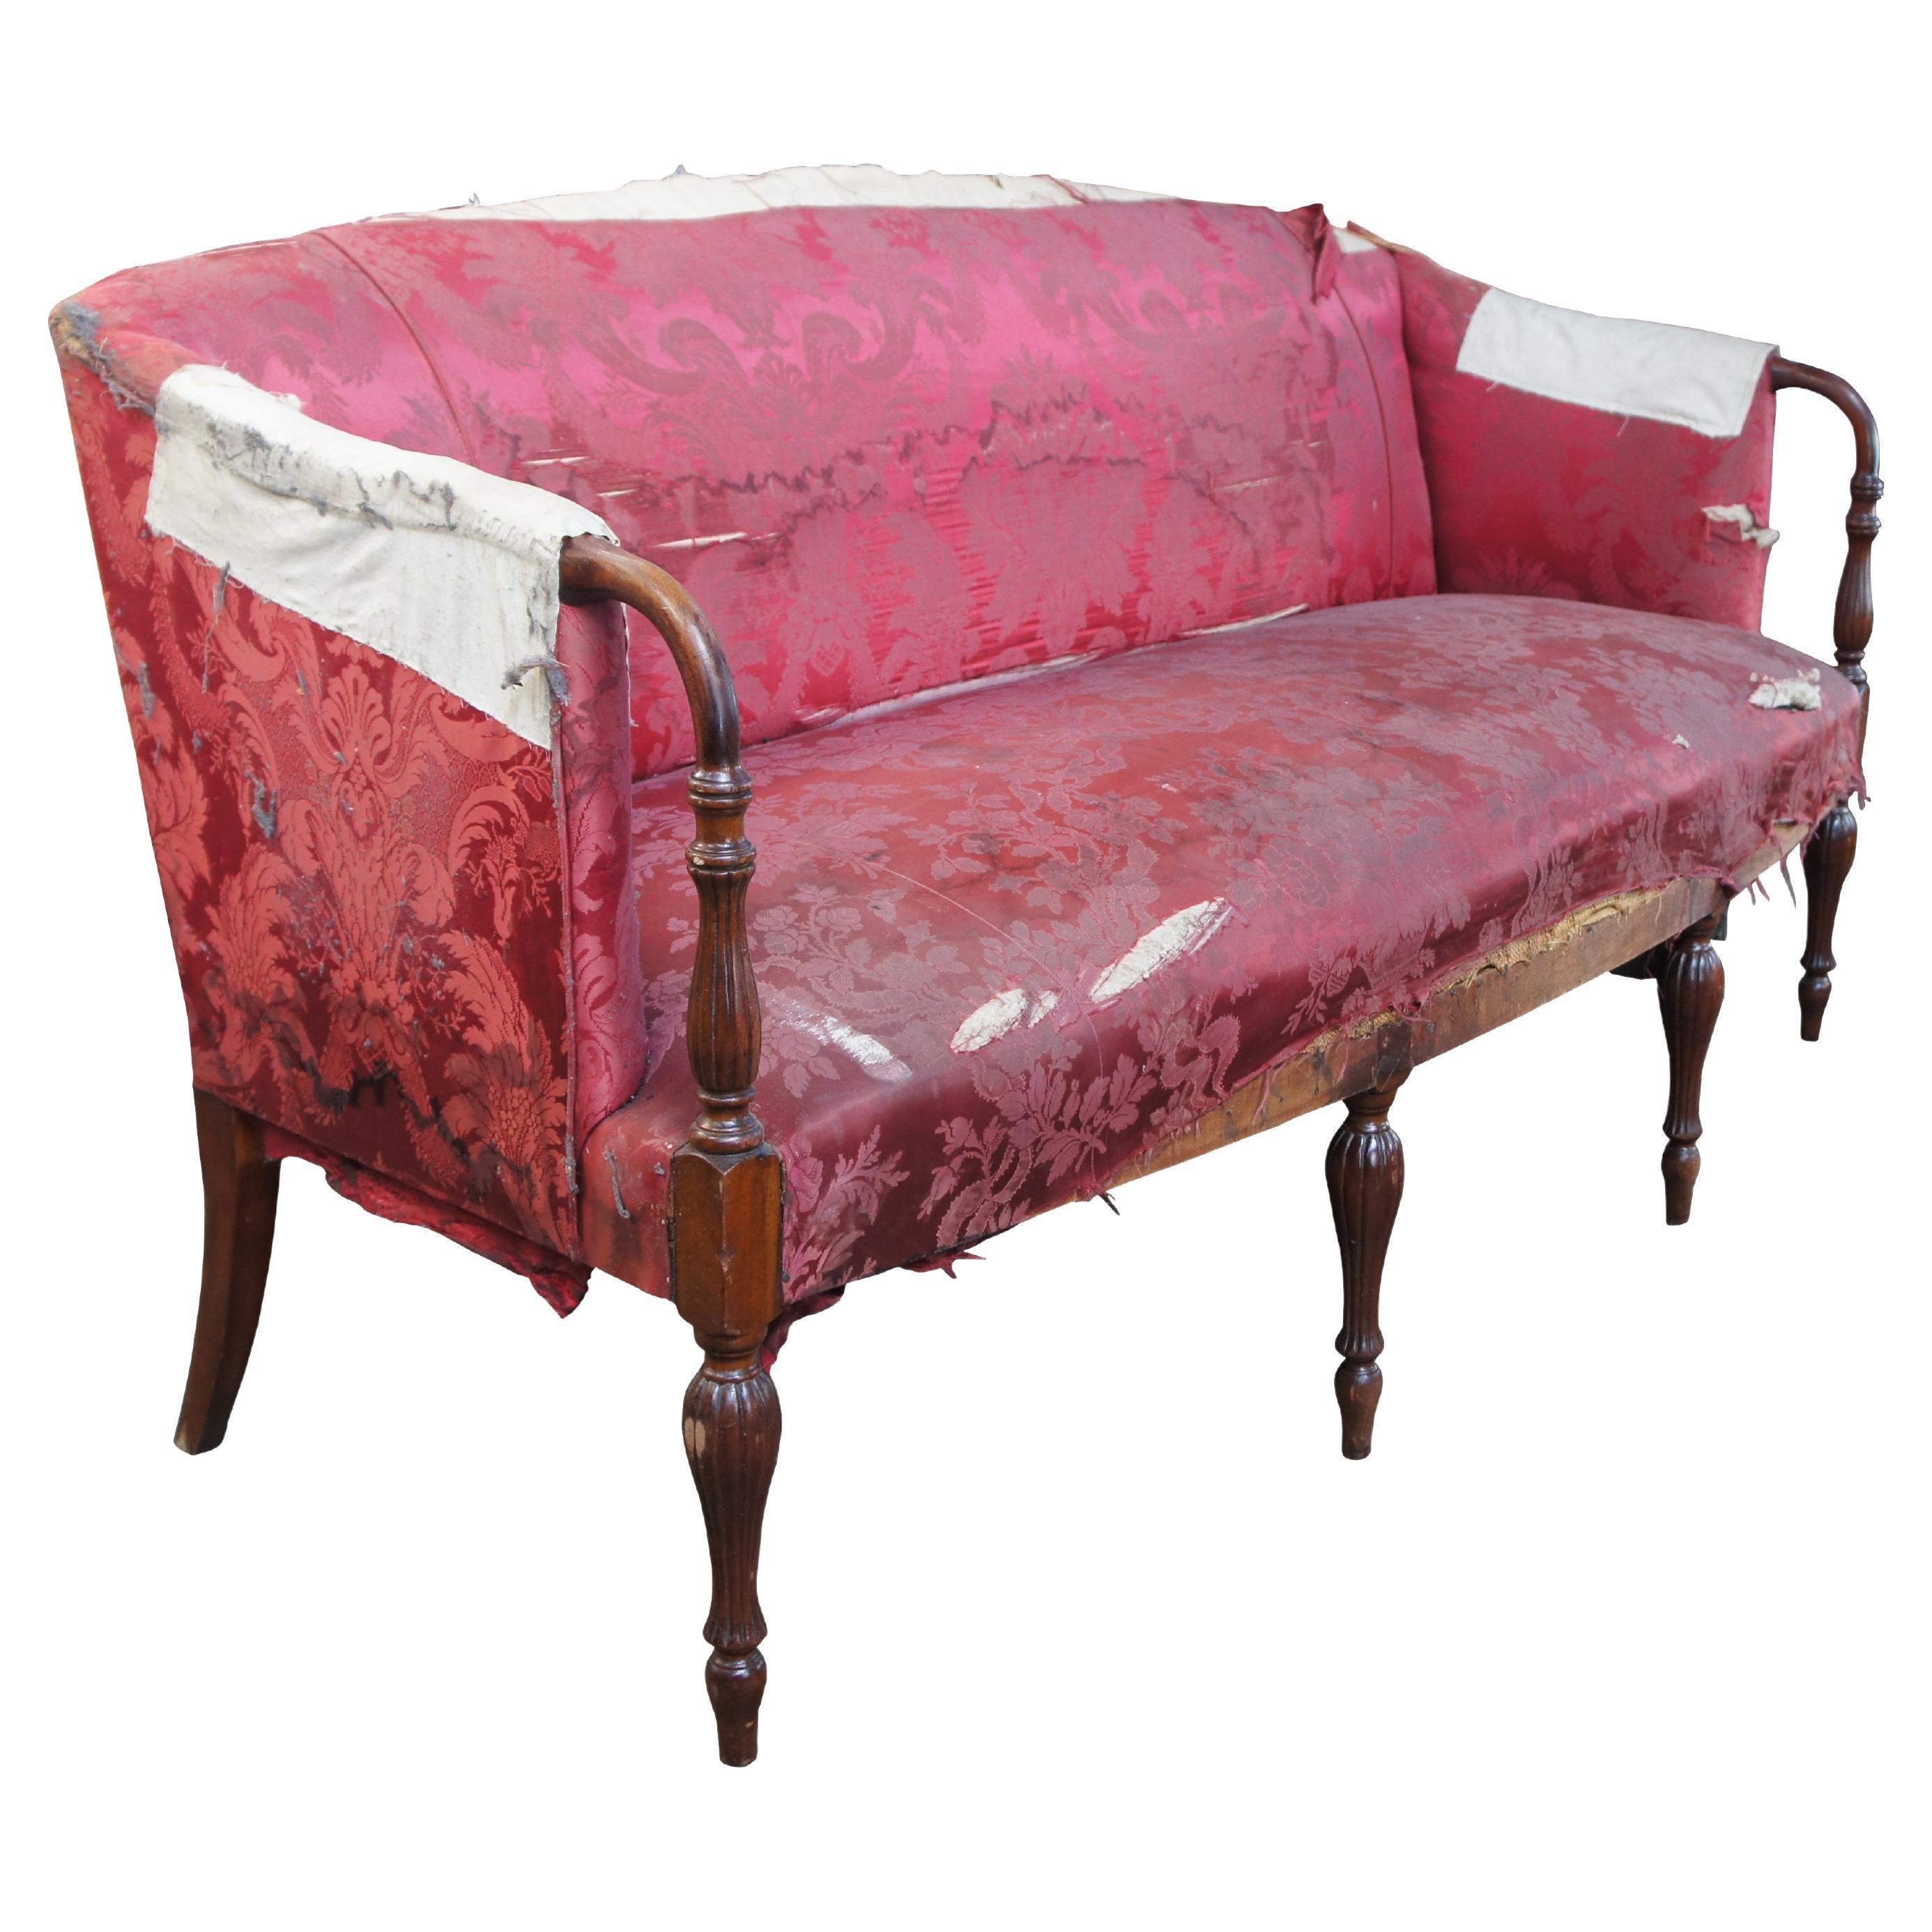 Seltenes antikes geschnitztes amerikanisches Federal Mahagoni-Sofa-Sessel aus dem 19. Jahrhundert